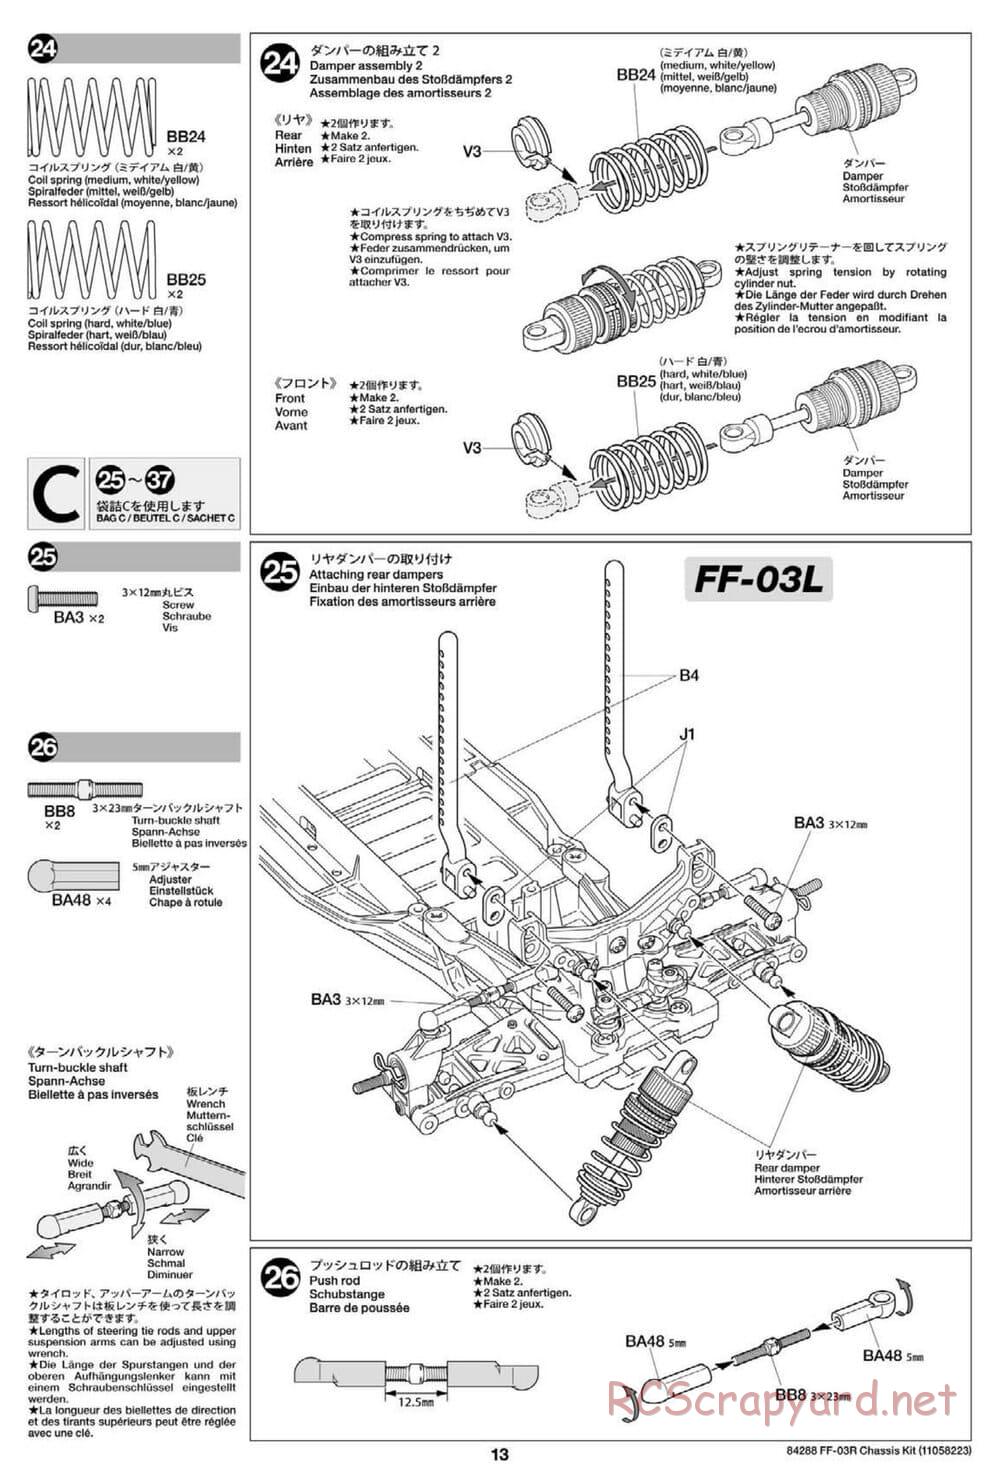 Tamiya - FF-03R Chassis - Manual - Page 15